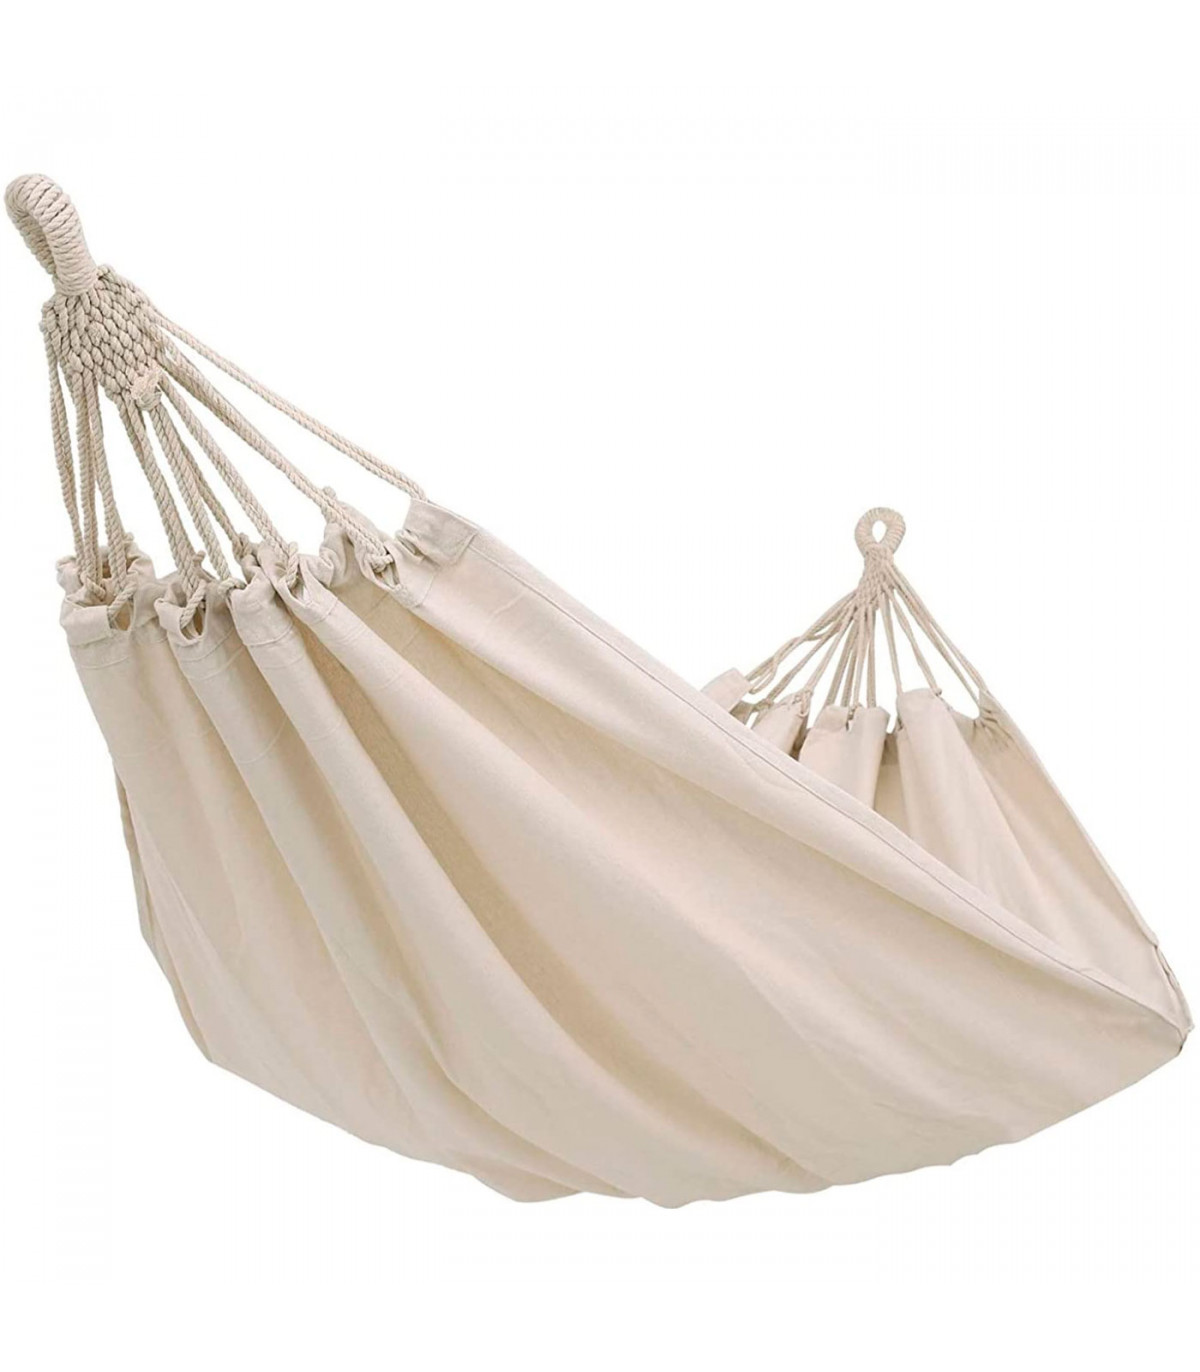 Tradineur - Hamaca de algodón con bolsa, 1-2 personas, máximo 120 kg,  columpio de tela para dormir, camping, jardín, exterior (B